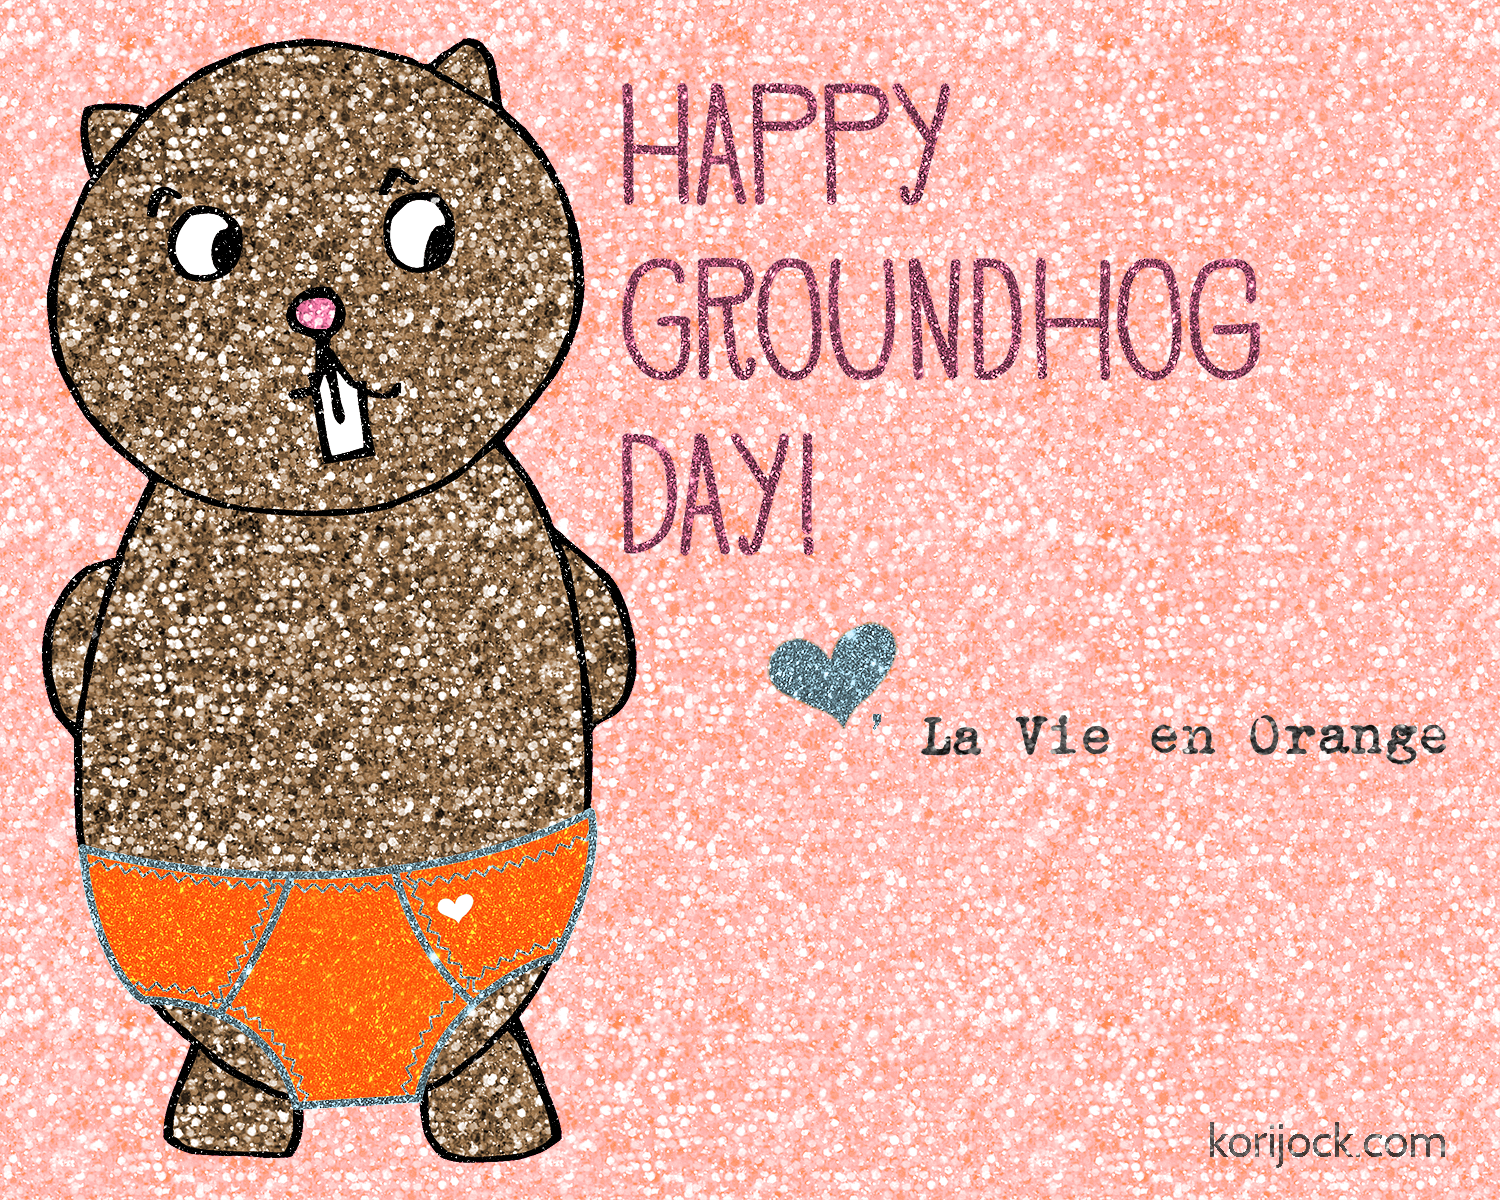 Glitter Groundhog - Happy Groundhog Day, Love La Vie en Orange | korijock.com